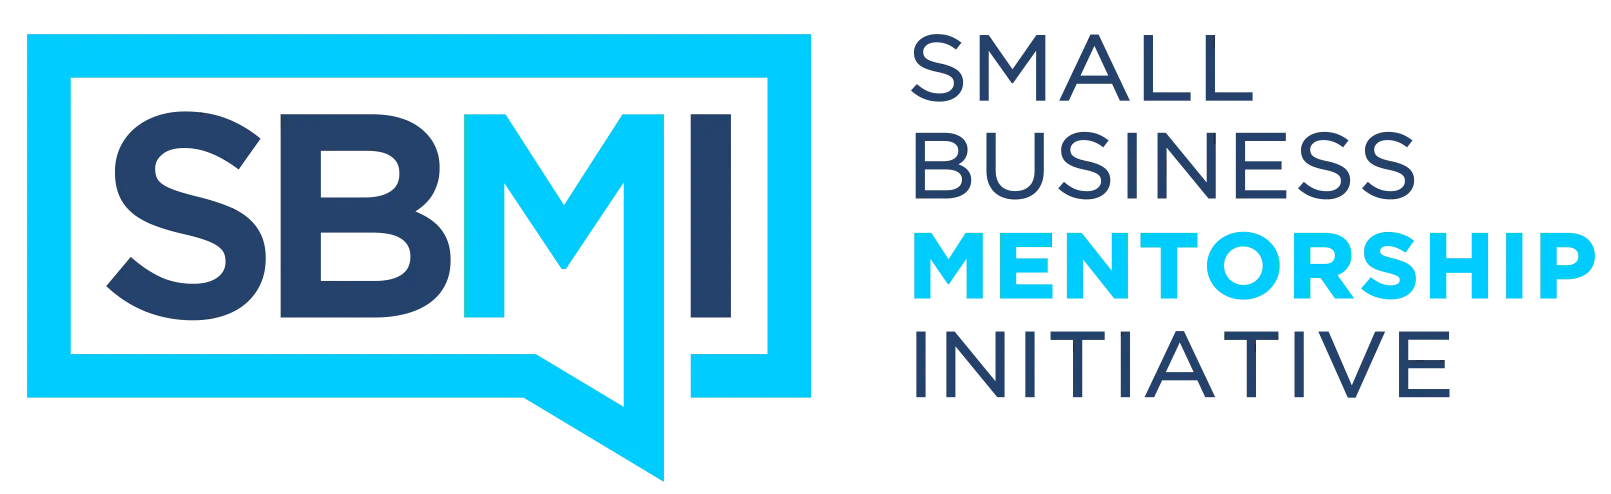 Small Business Mentorship Initiative | World-Class Mentorship For Small Businesses